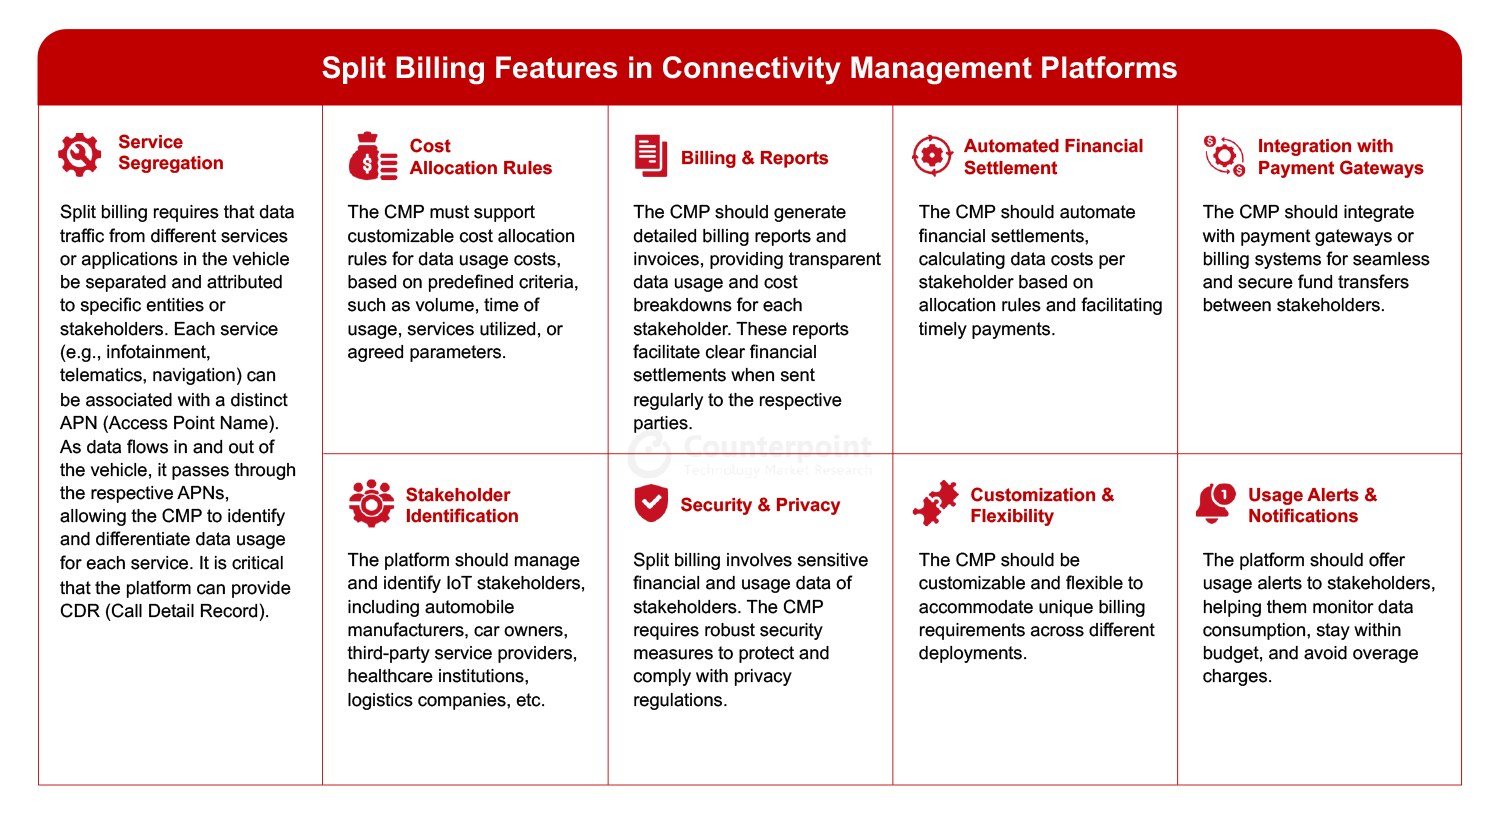 Split billing features in connectivity management platforms